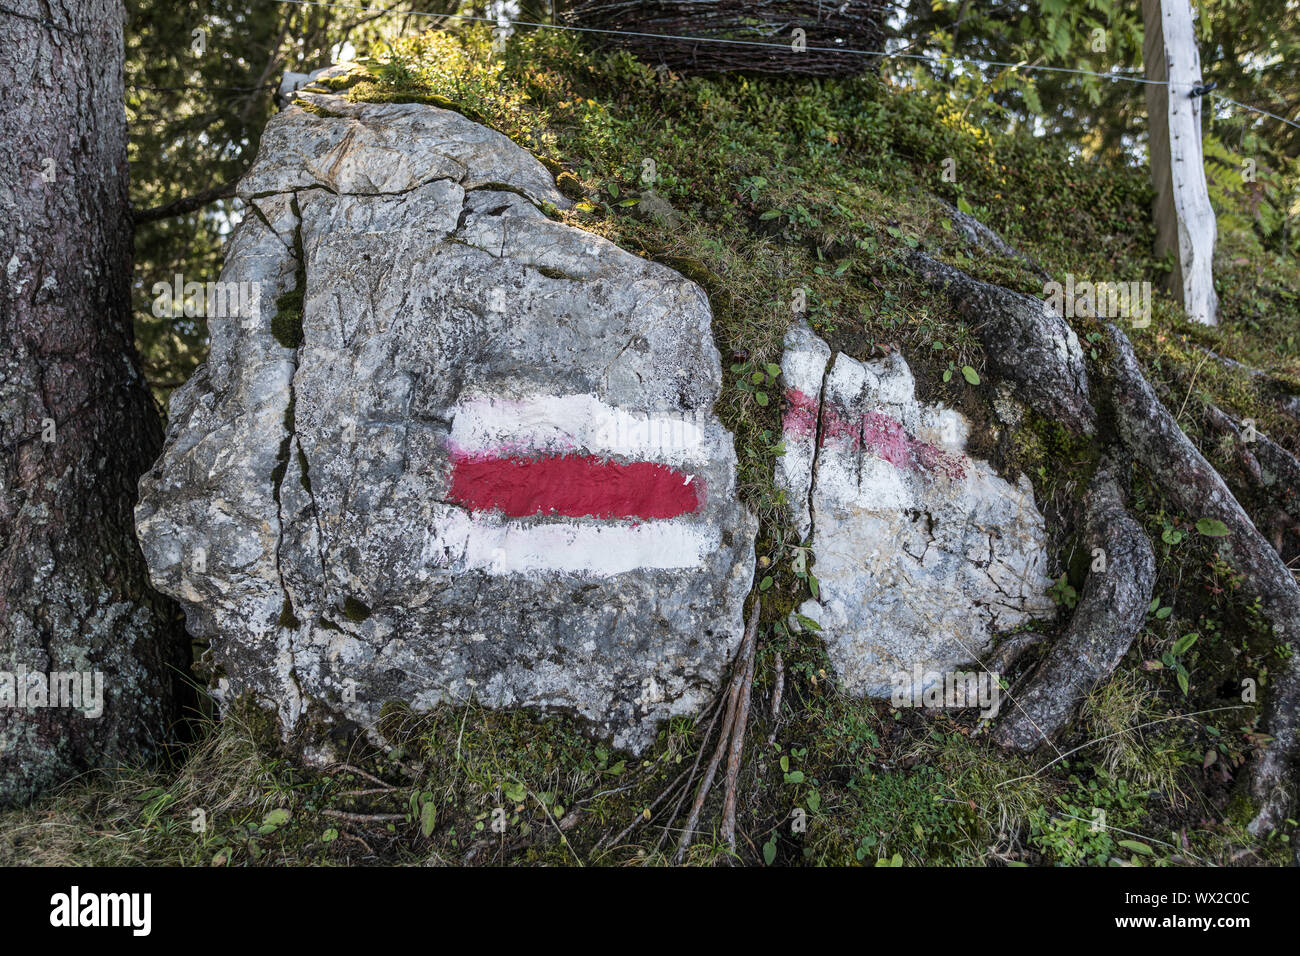 White-red-white stands for mountain trail, Wirzweli, Nidwalden, Switzerland, Europe Stock Photo